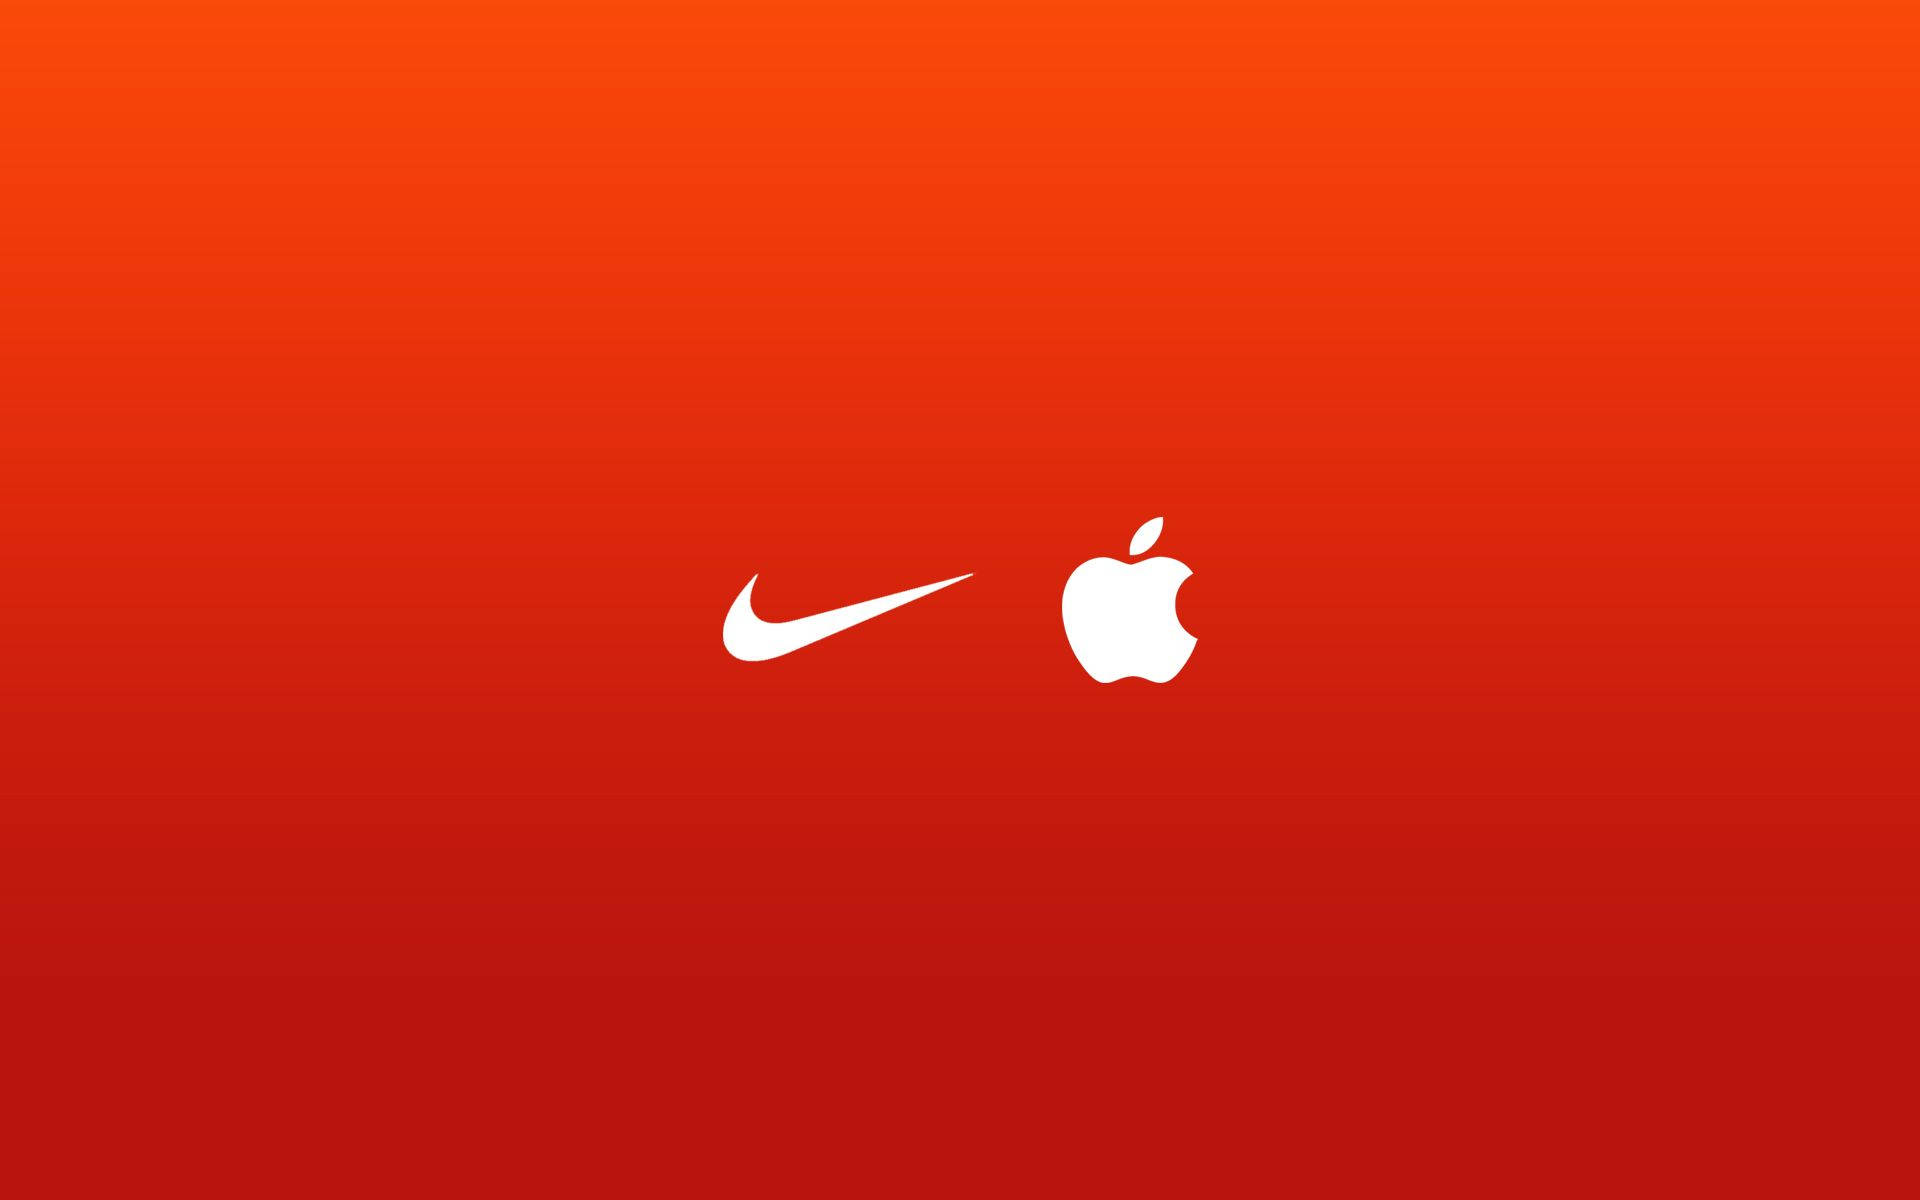 Cool Minimal Nike And Apple Emblem Background